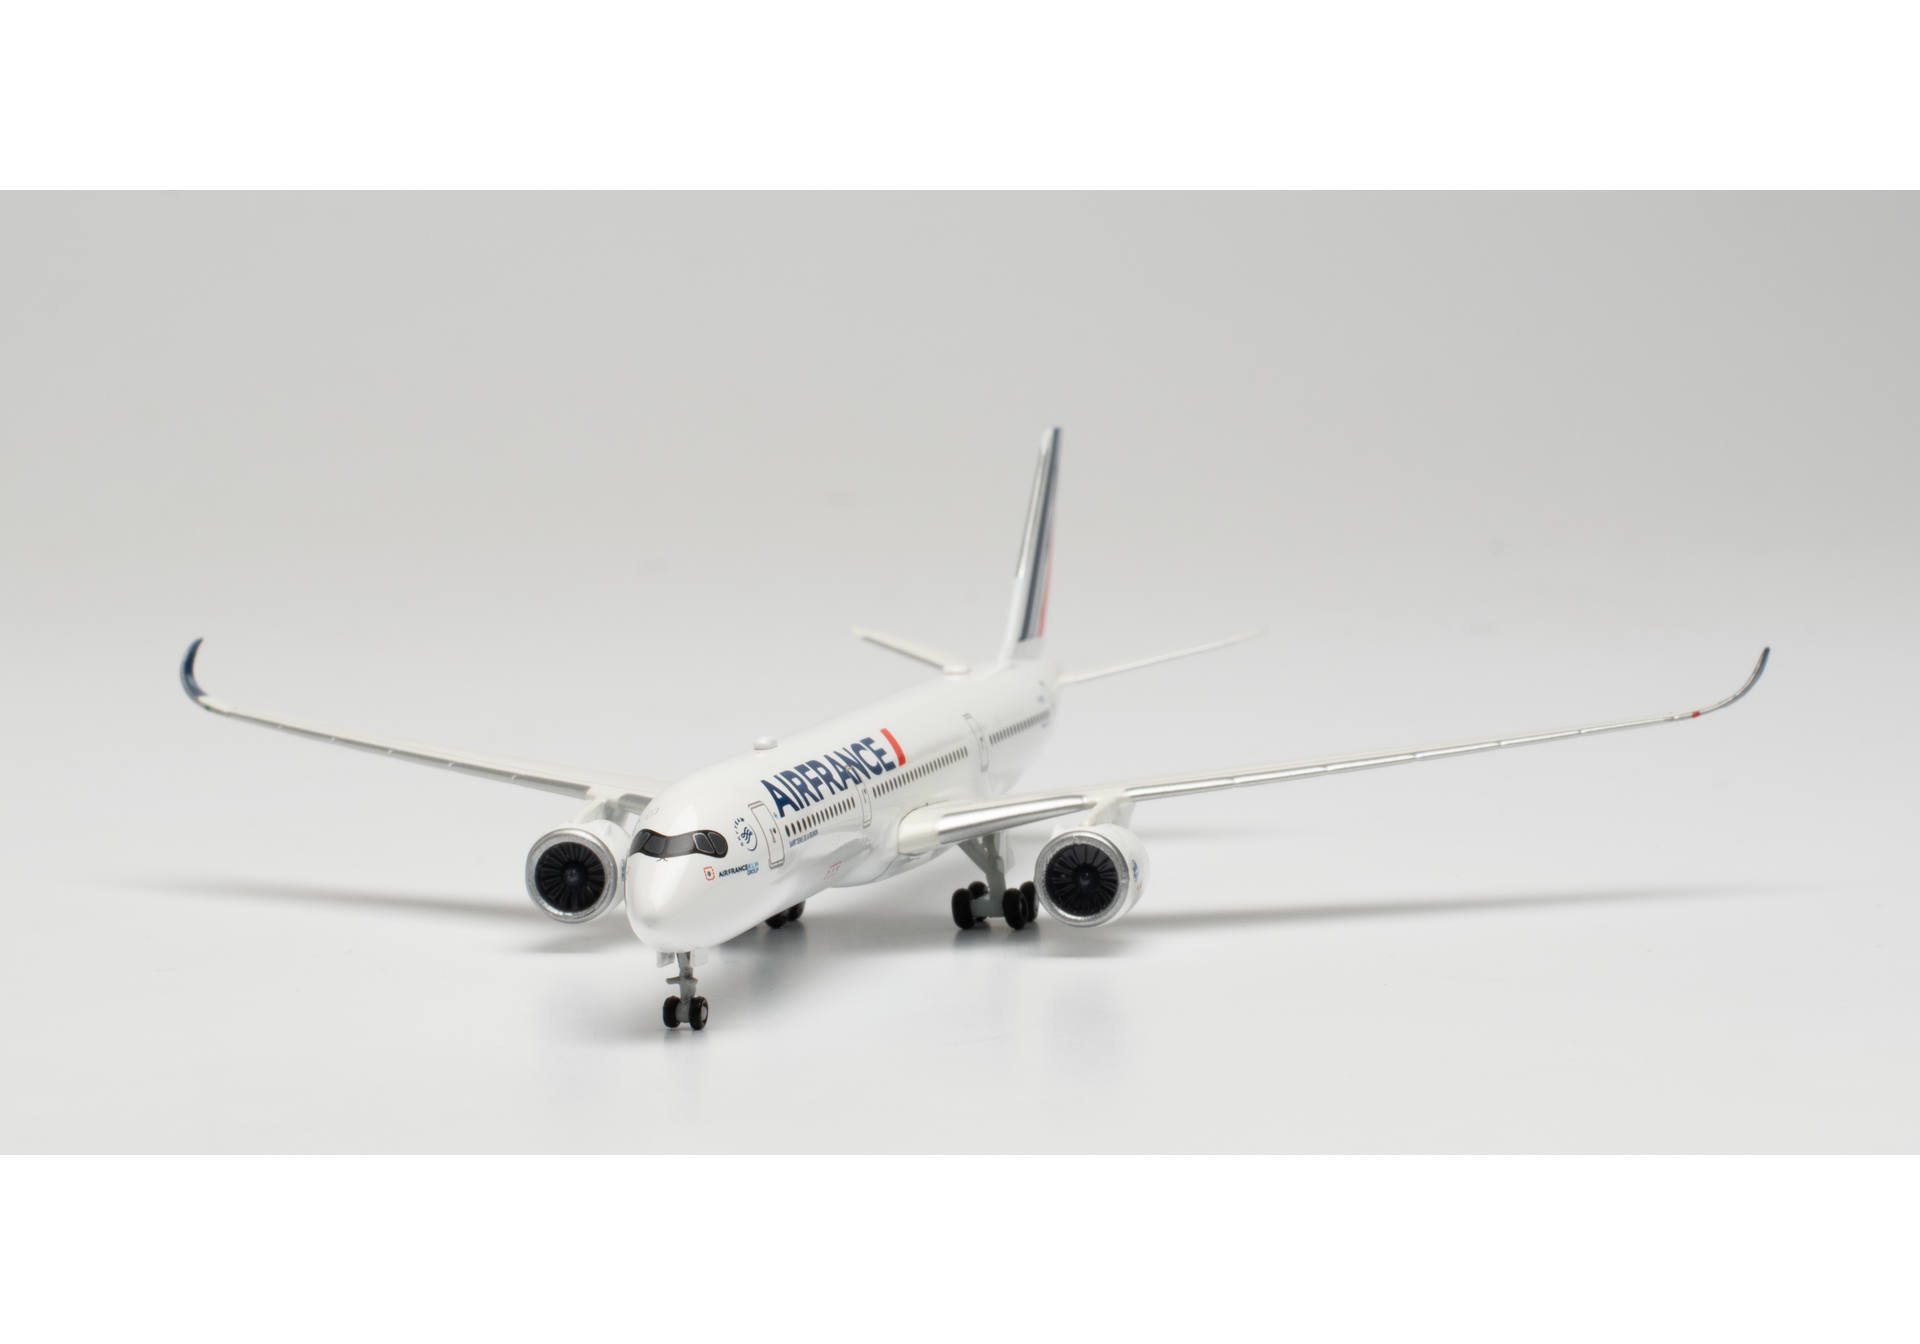   Air France Airbus A350-900  F-HTYC, 1:500, 533478-001. # 4 hobbyplus.ru